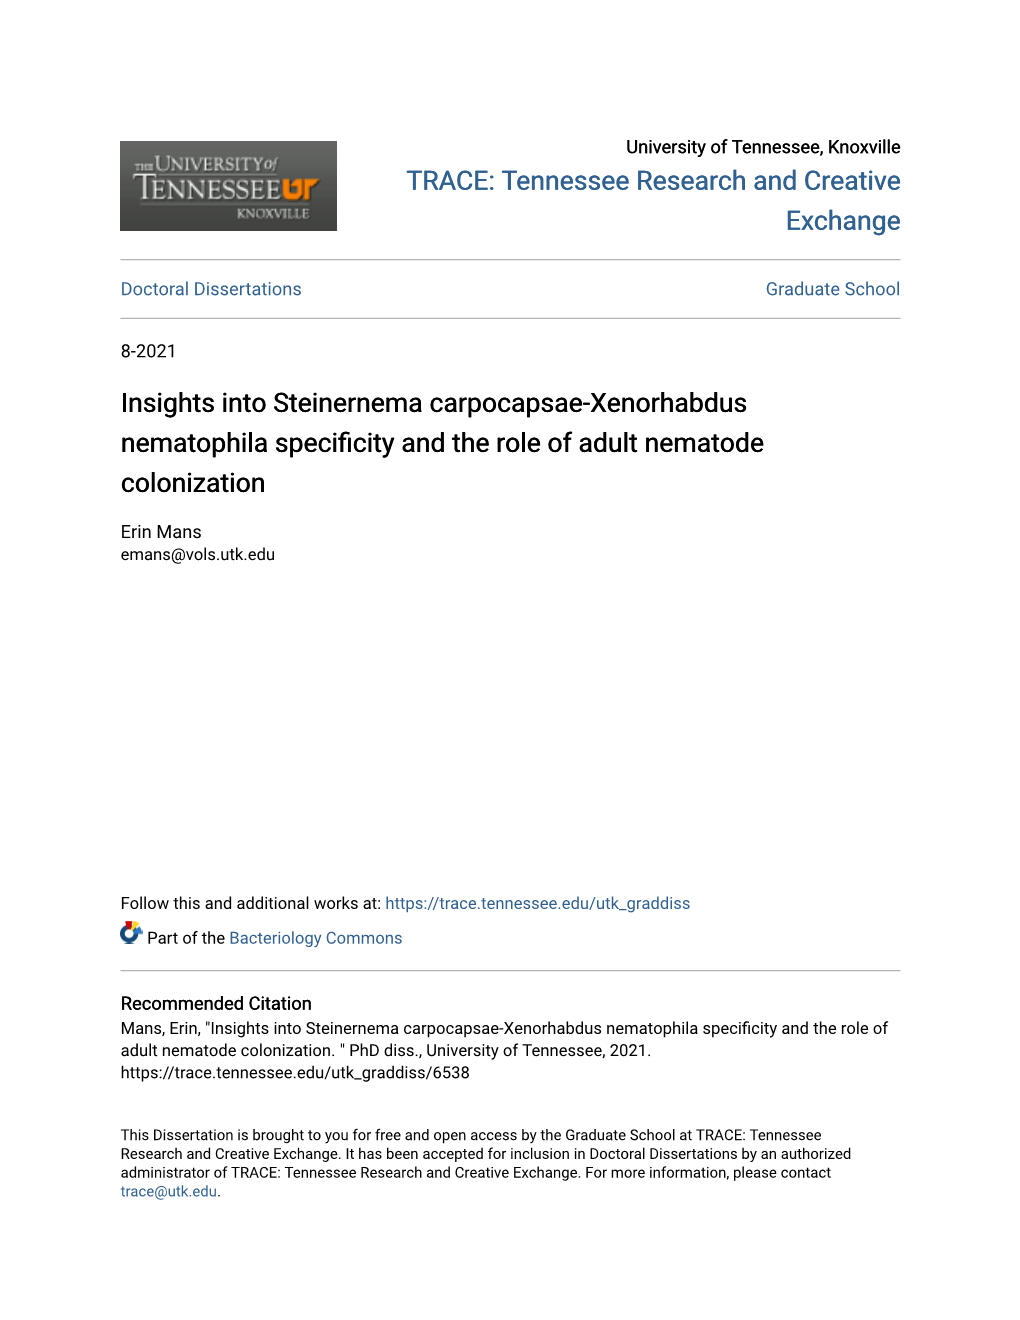 Insights Into Steinernema Carpocapsae-Xenorhabdus Nematophila Specificity and the Role of Adult Nematode Colonization